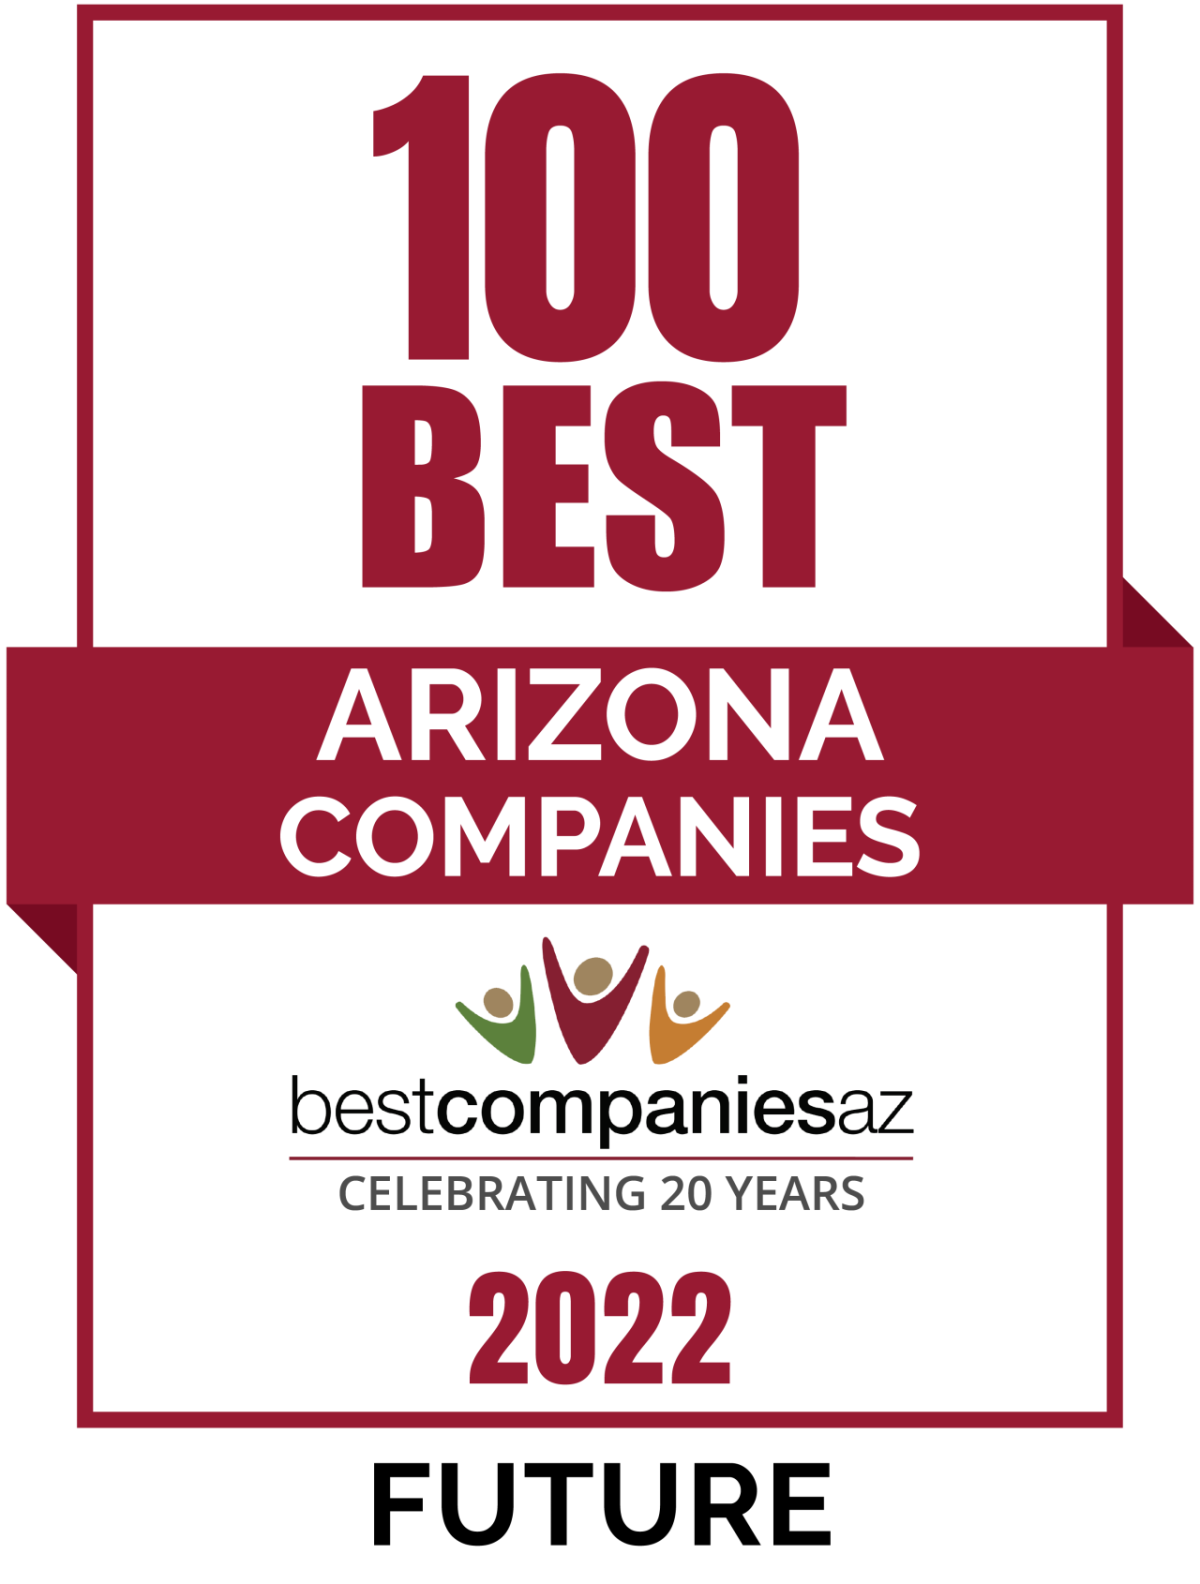 Award Logo "100 Best Arizona Companies, Arizona Companies, bestcompaniesaz, celebrating 20 years, 2022 Future"